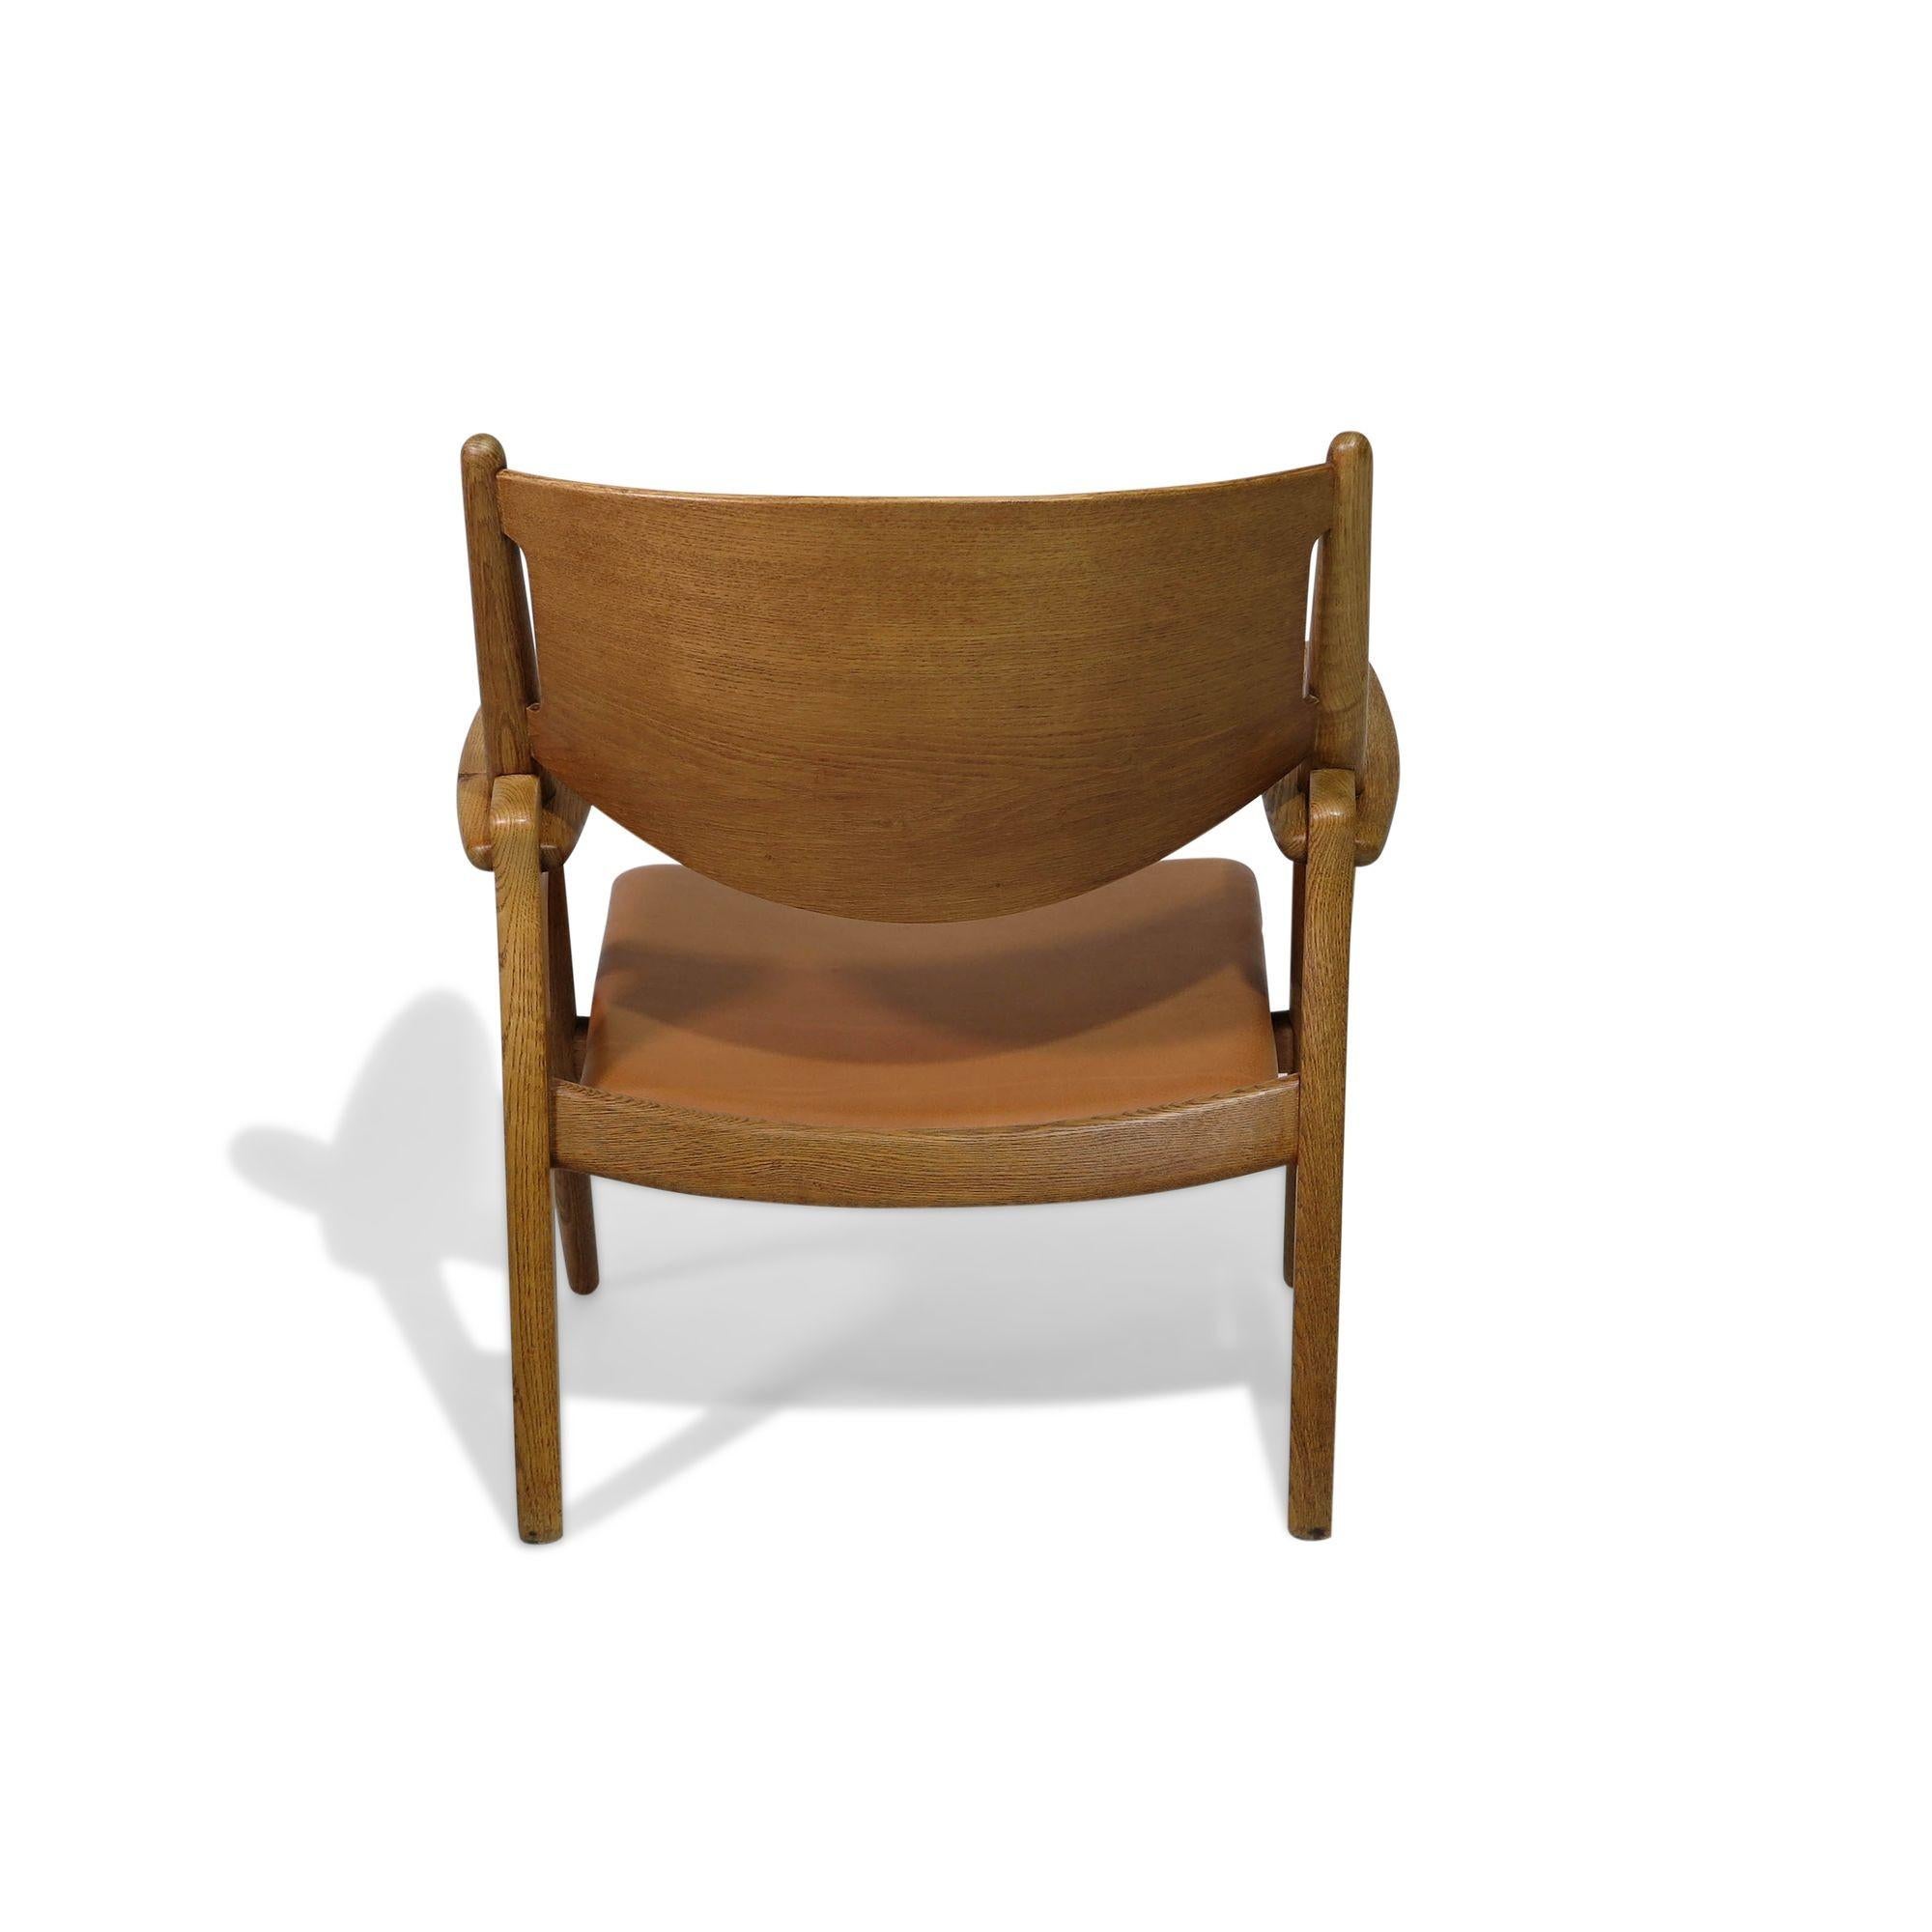 Oiled The Sawbuck Chair, CH28, by Hans Wegner, 1951